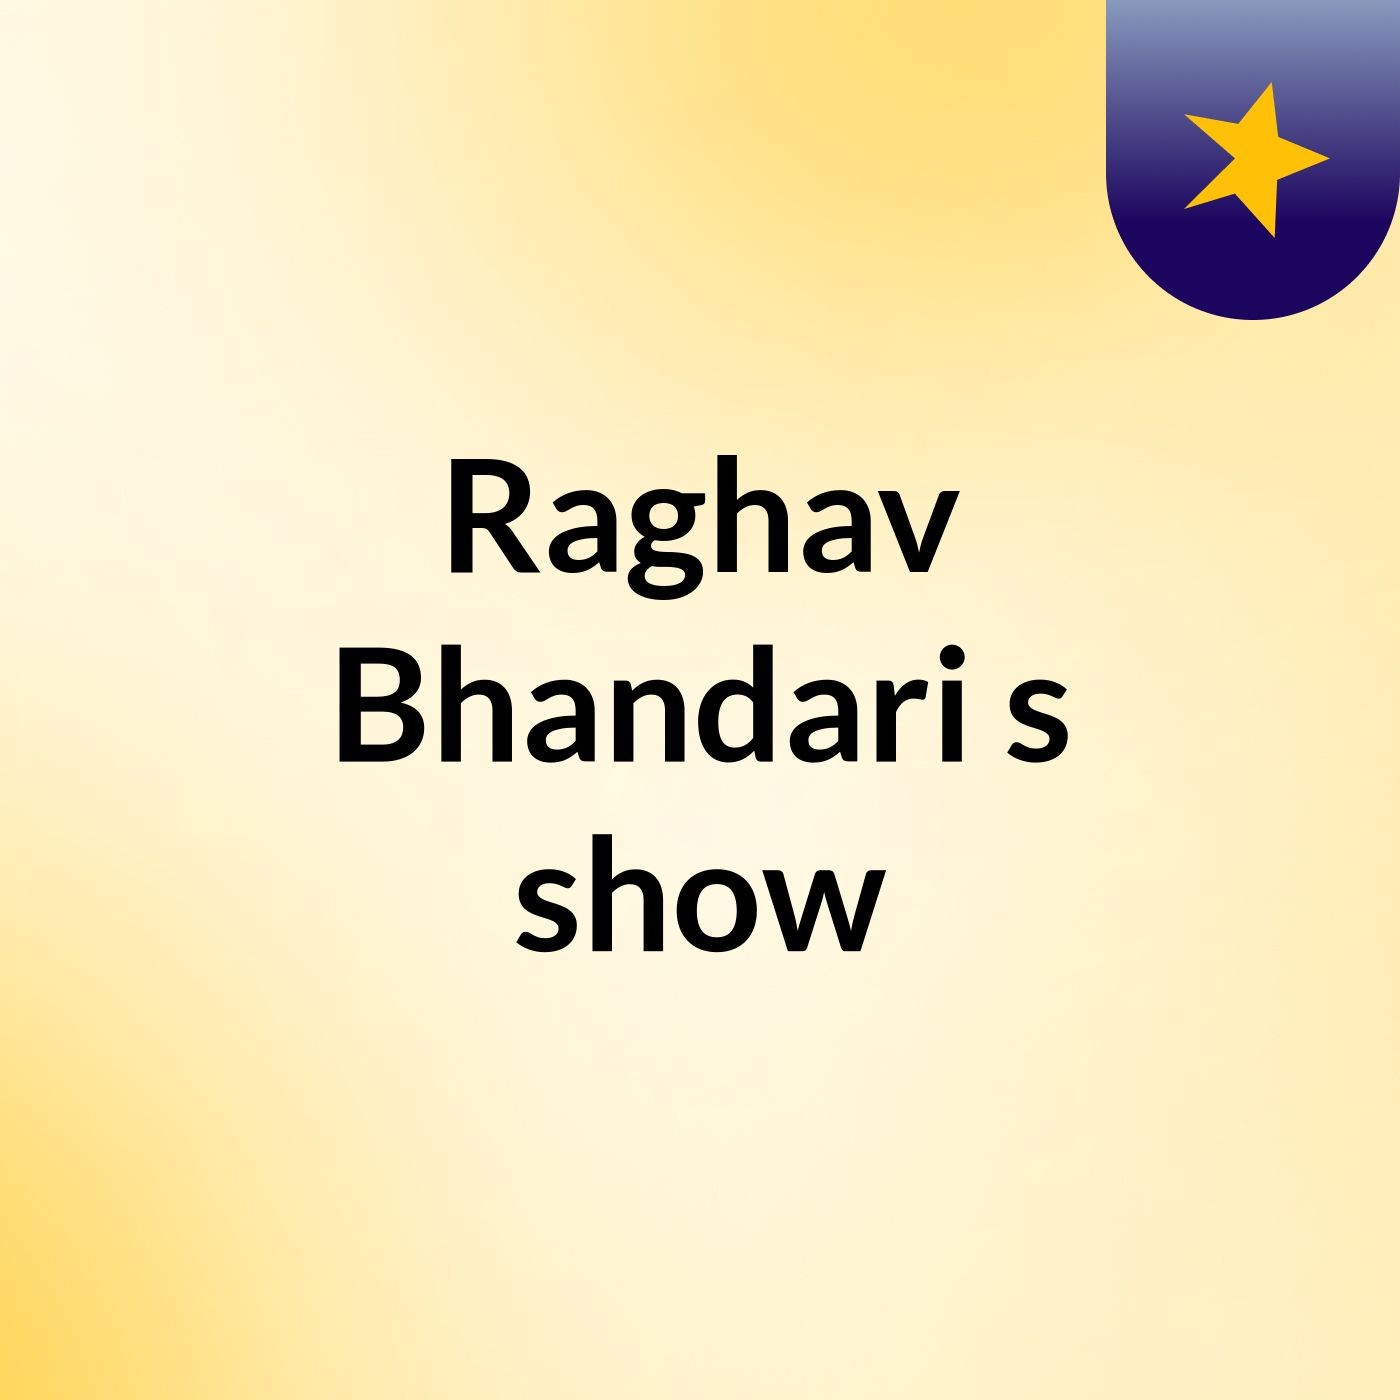 Raghav Bhandari's show